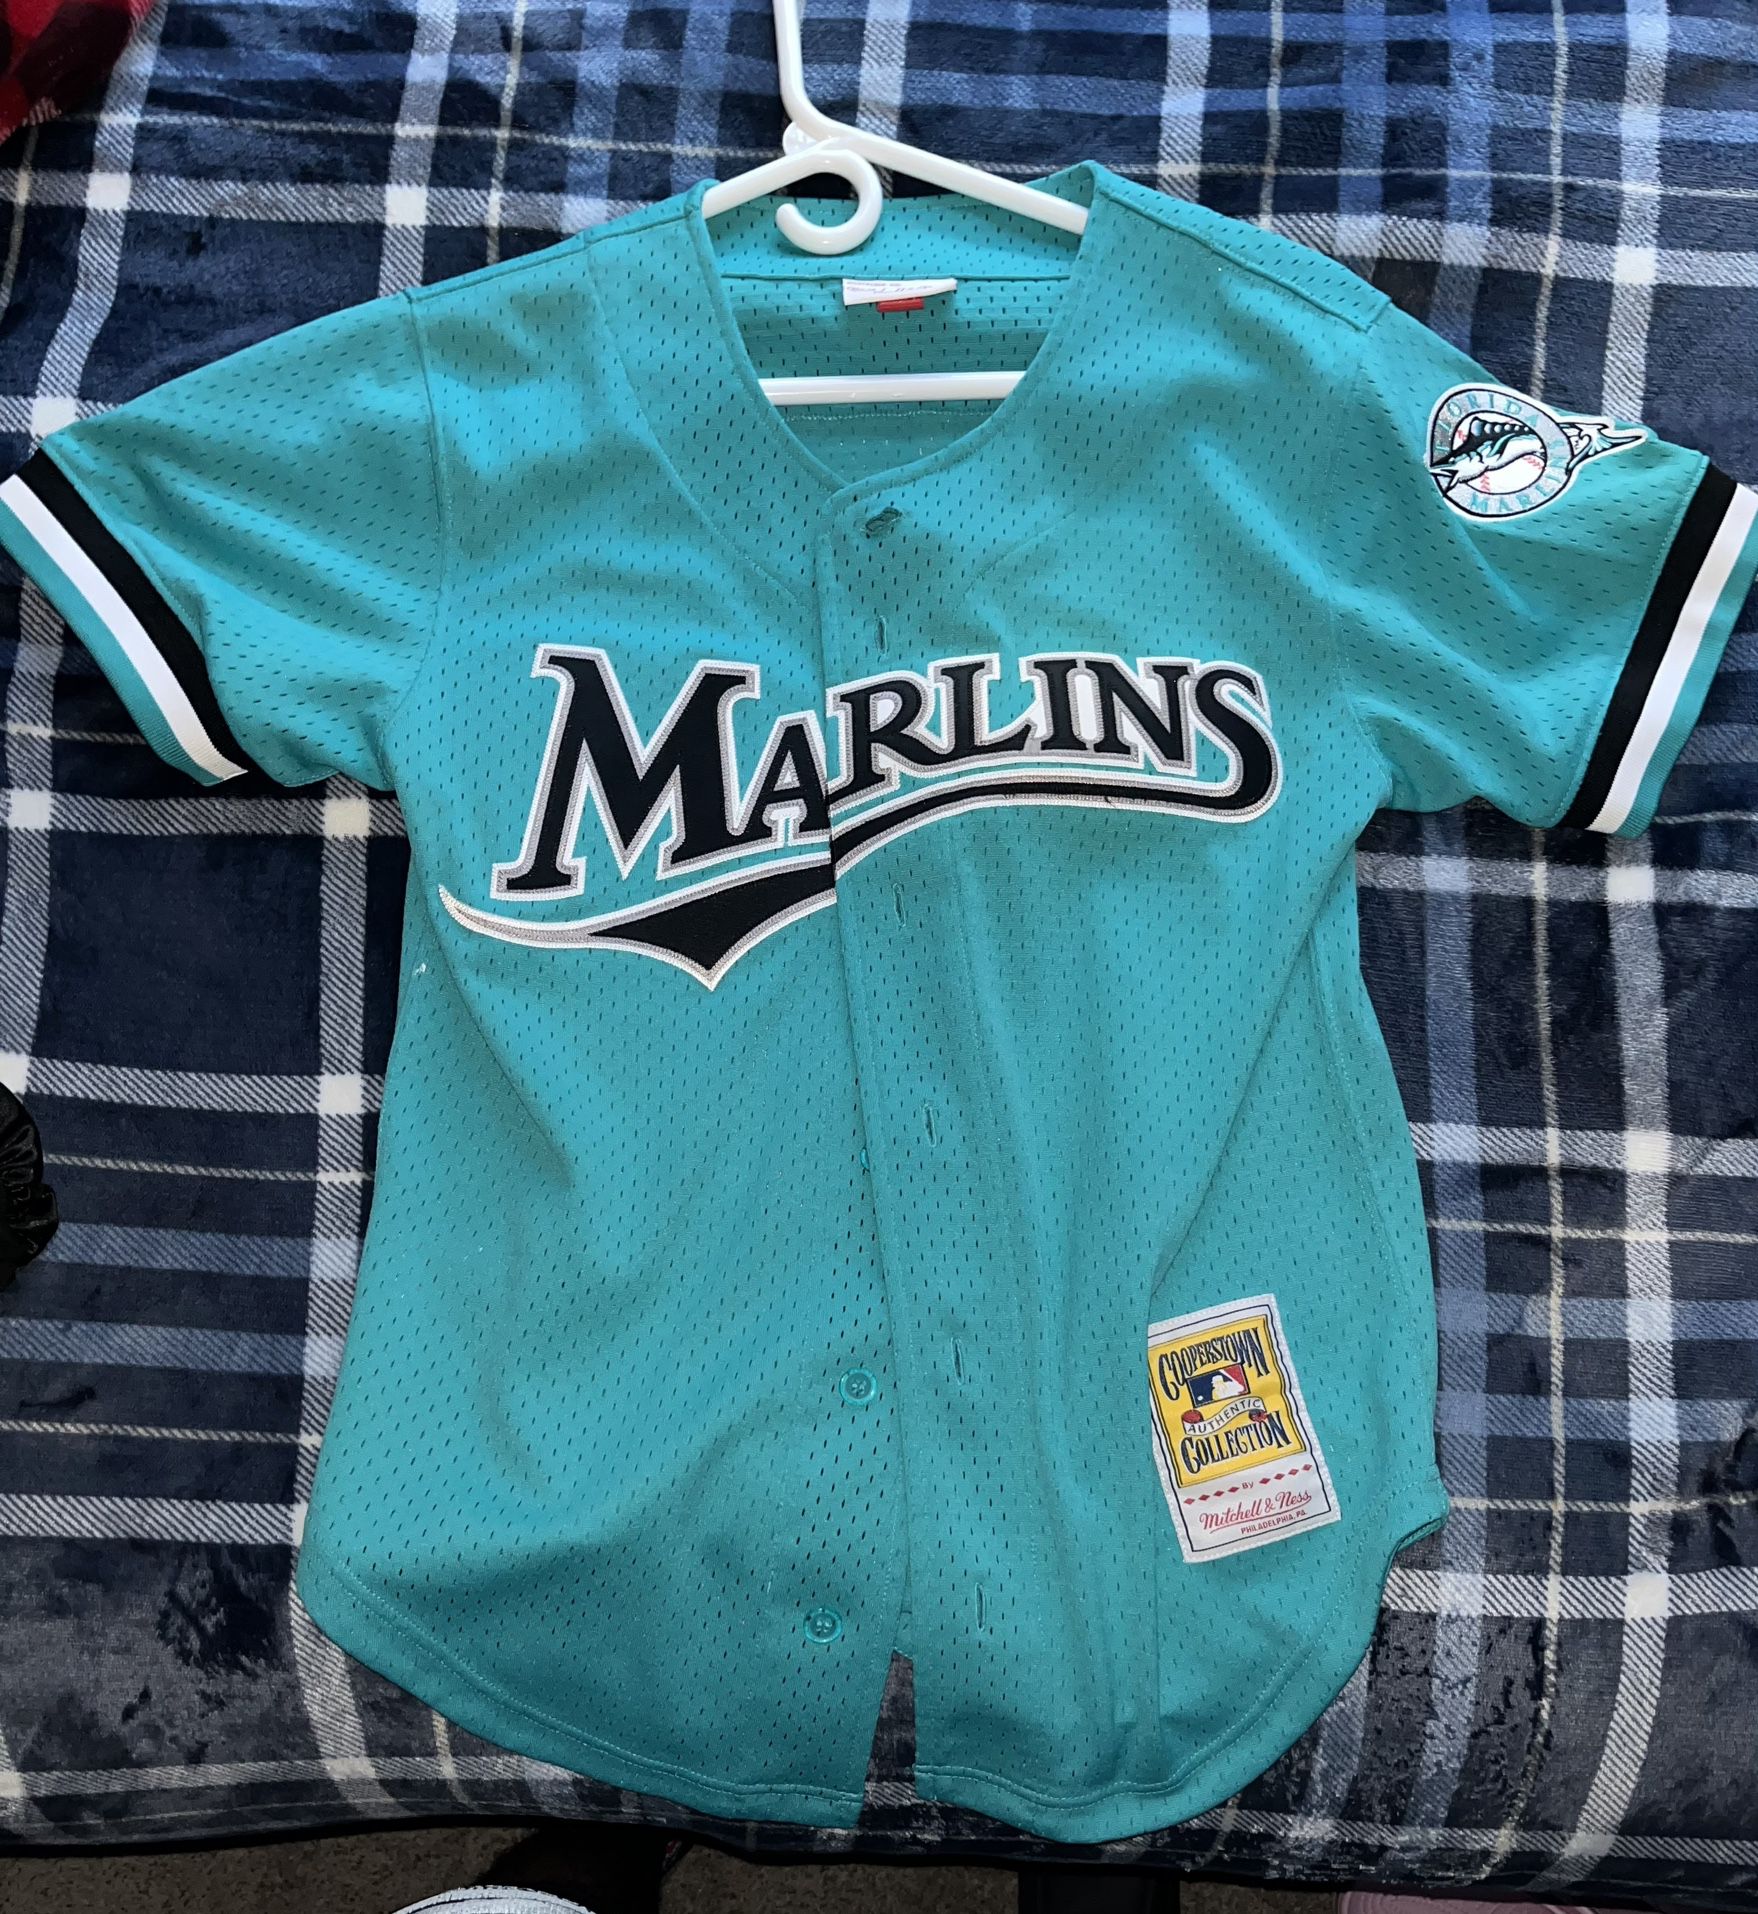 Marlins Baseball Jersey